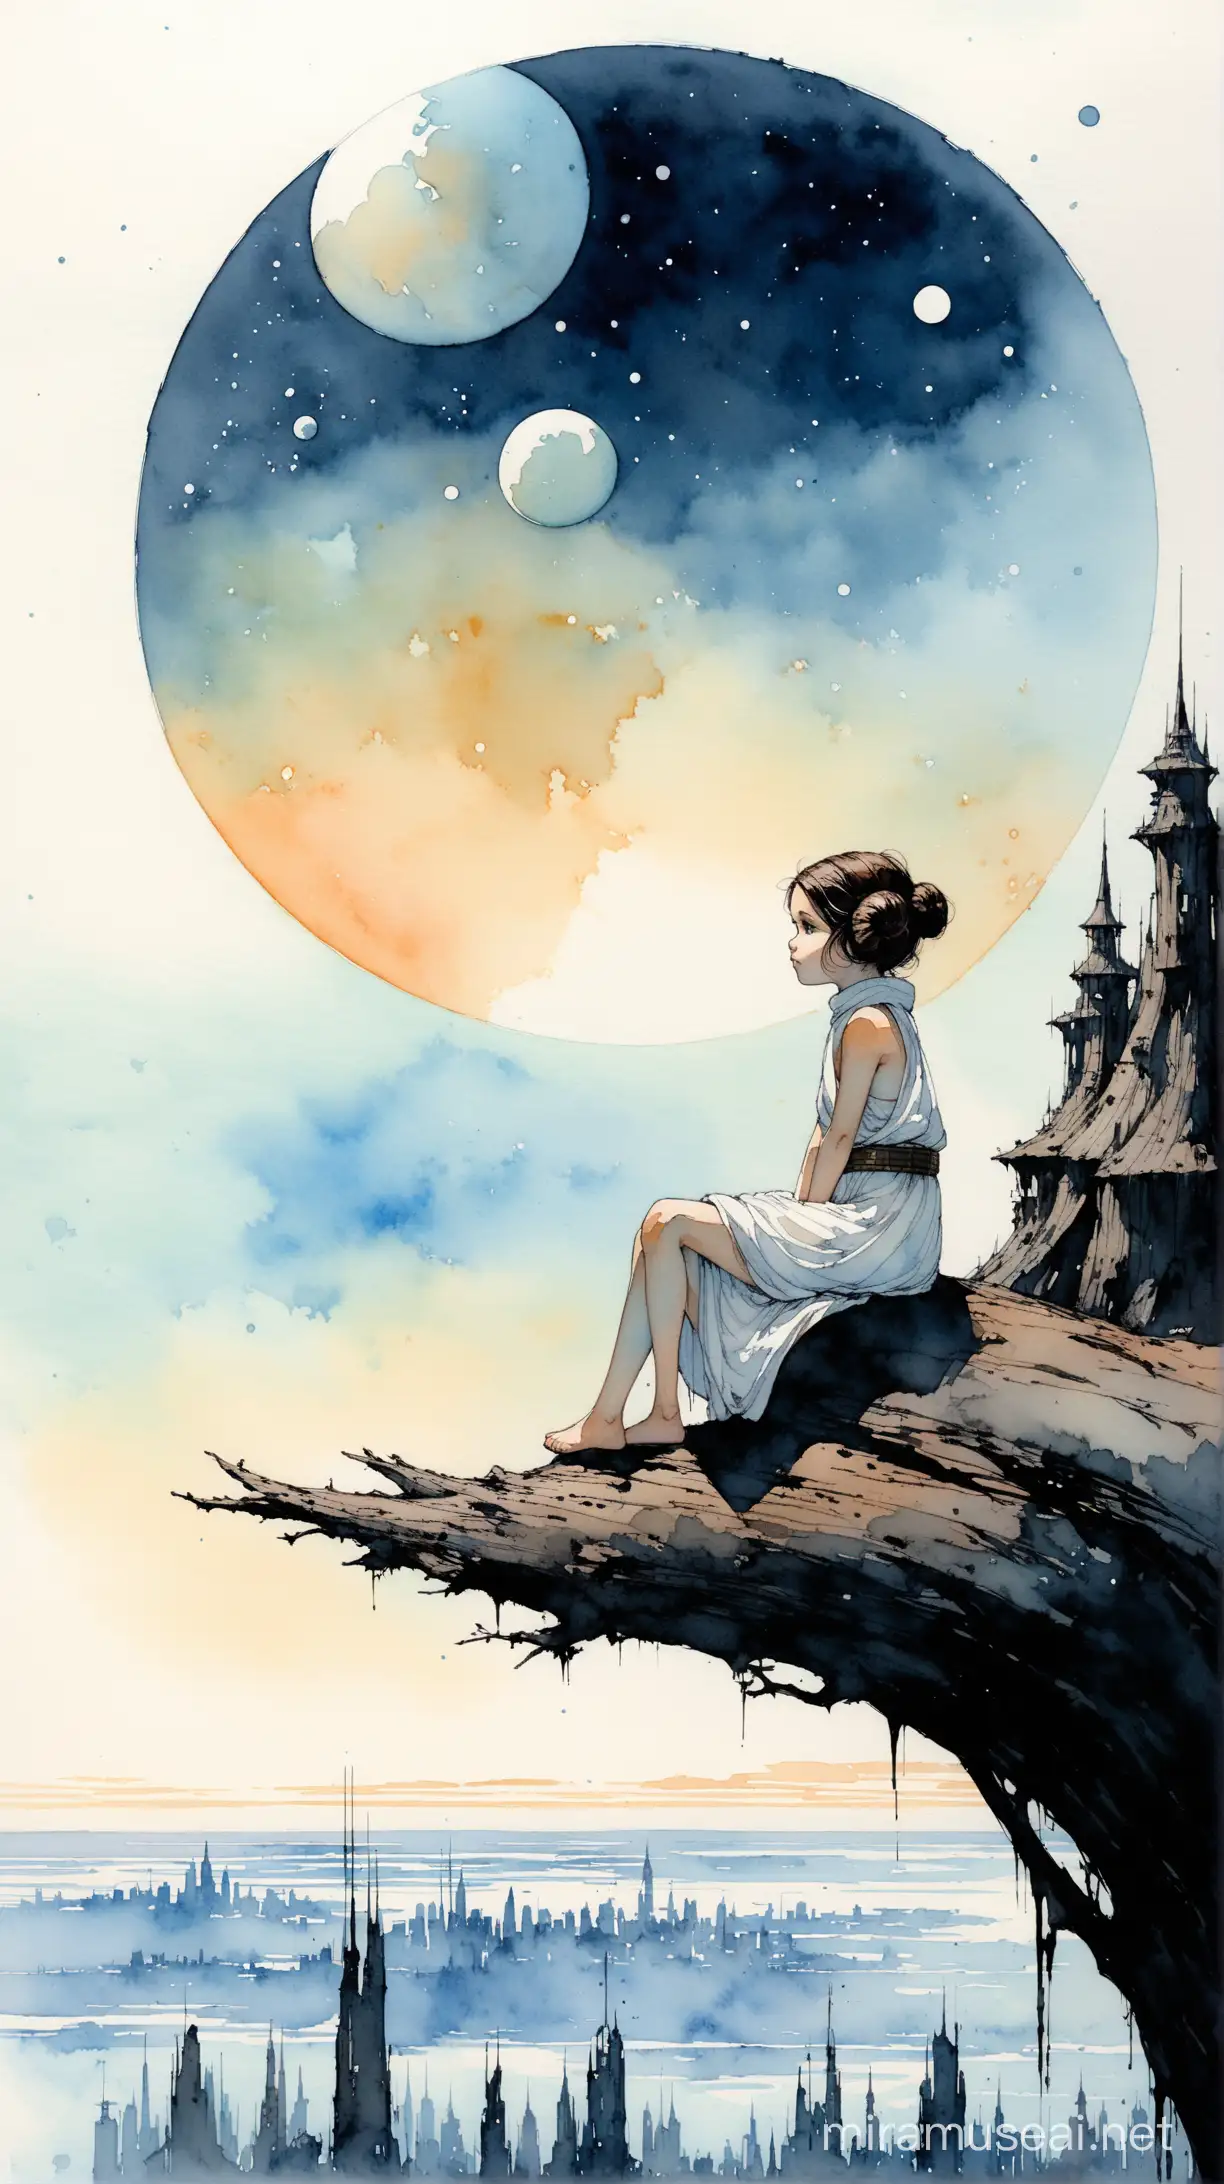 Child Princess Leia Sitting on Tree Branch with Alien Skyline